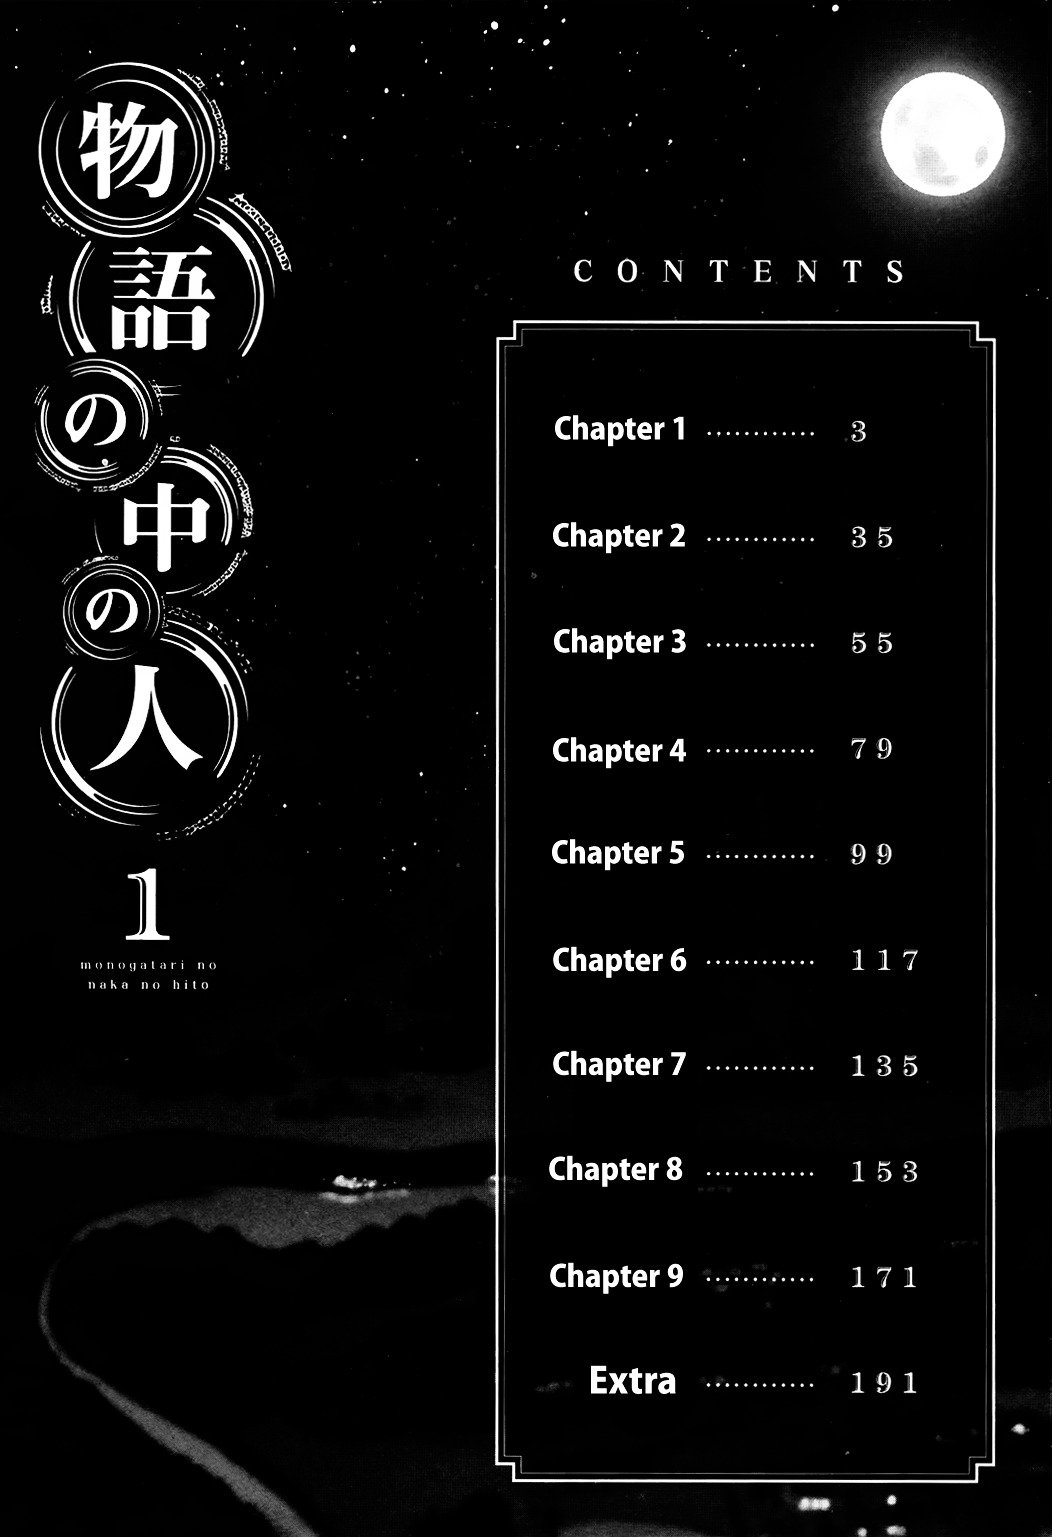 Monogatari no Naka no Hito vol.1 Chapter 1 - MyToon.net